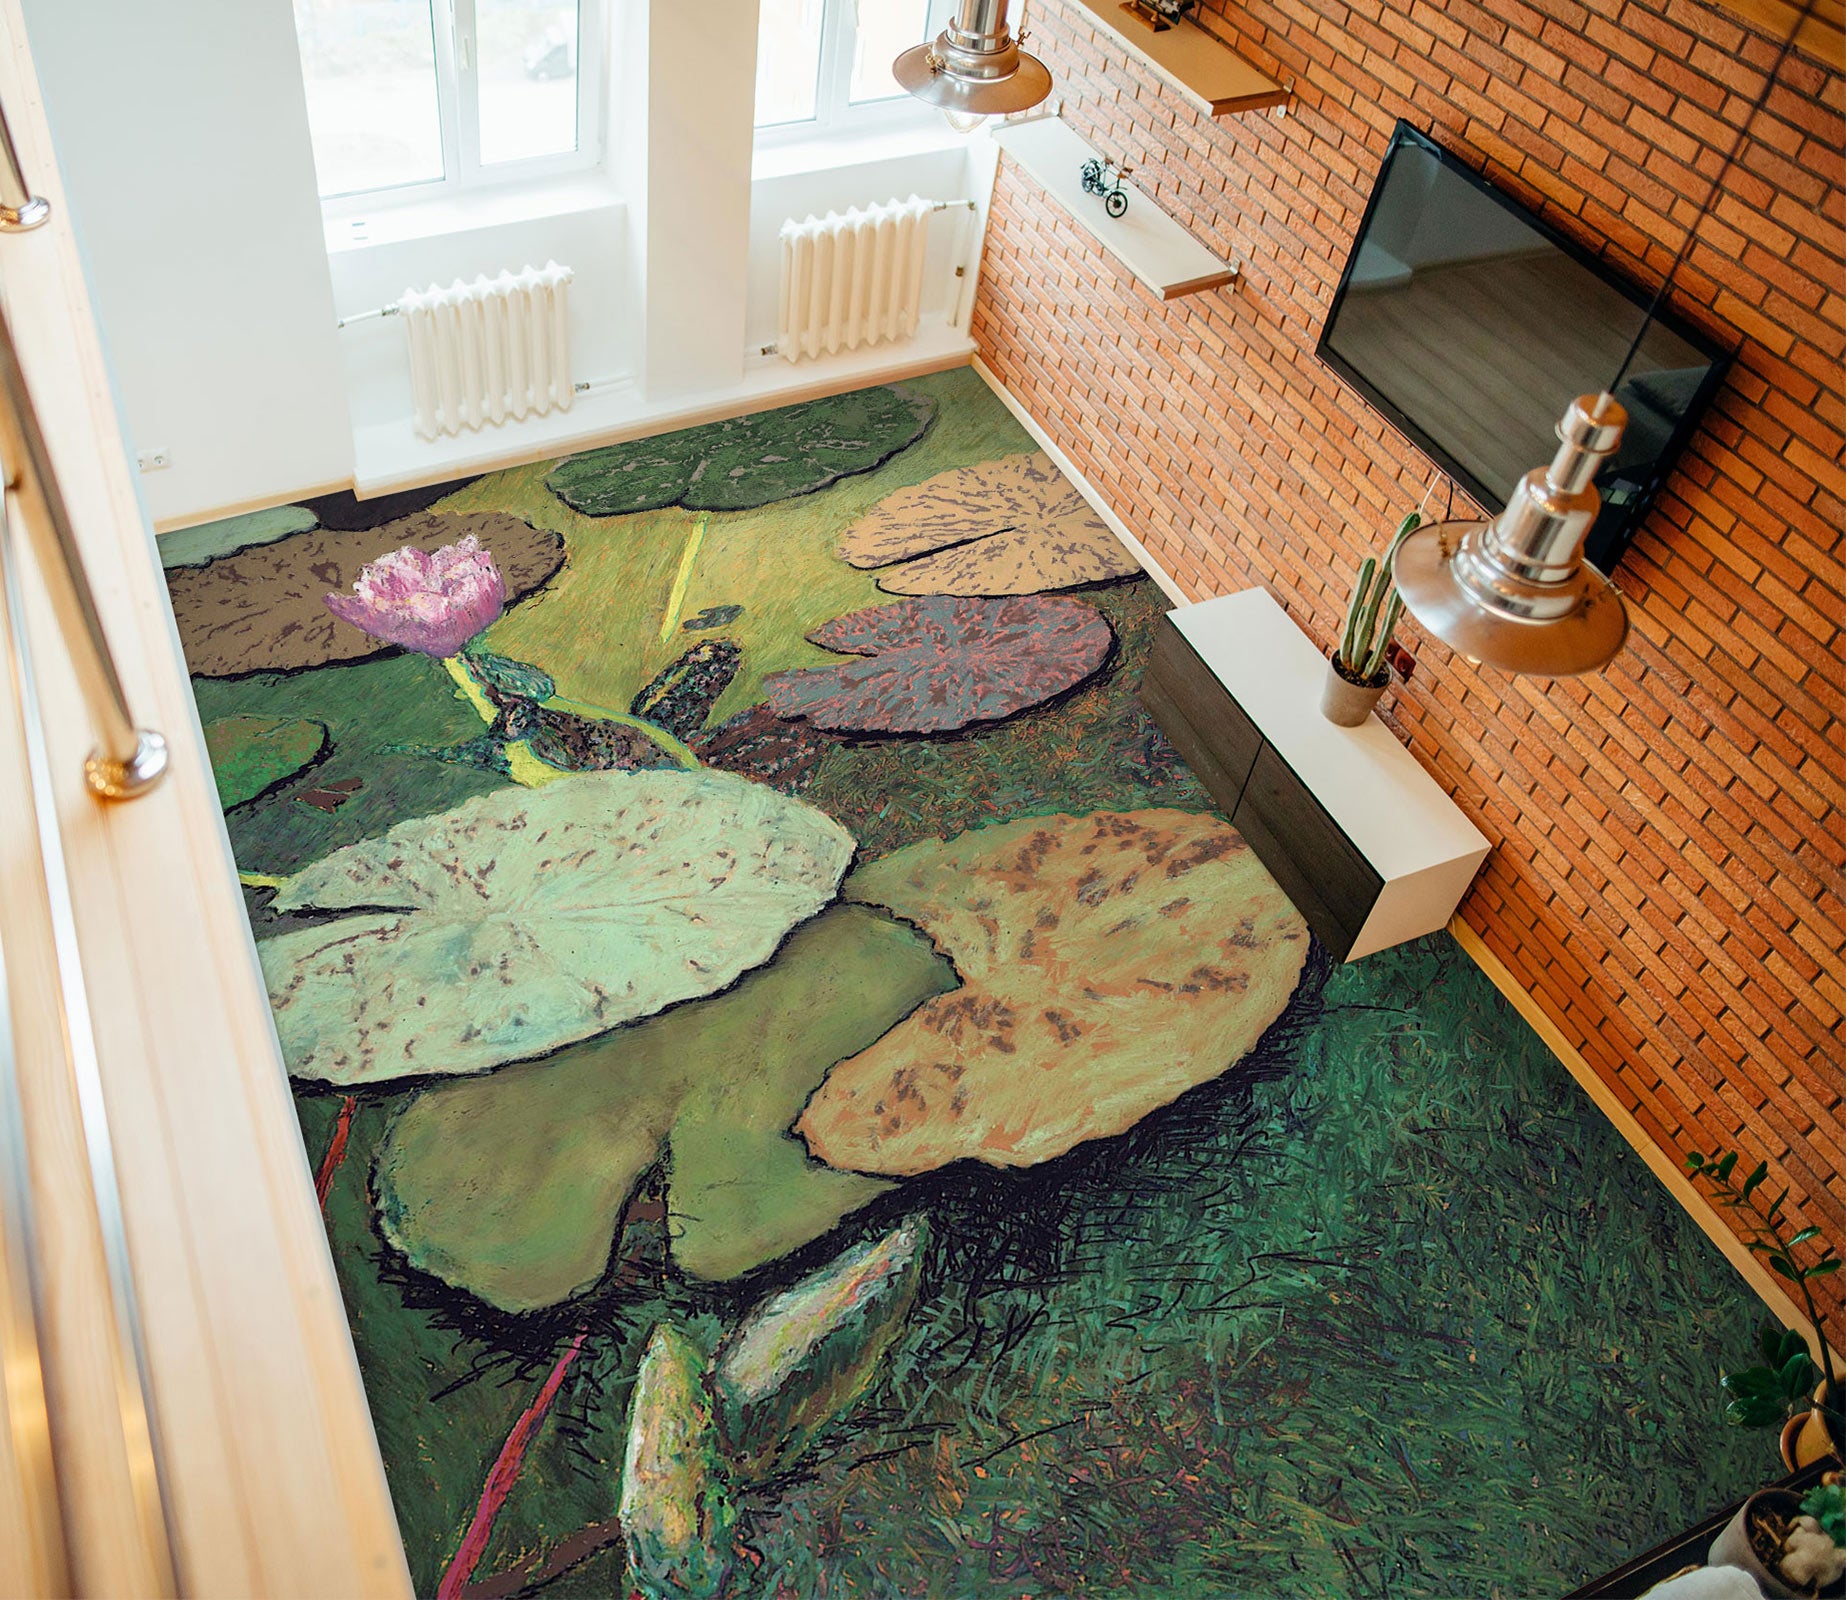 3D Lotus Leaf Pattern 96117 Allan P. Friedlander Floor Mural  Wallpaper Murals Self-Adhesive Removable Print Epoxy